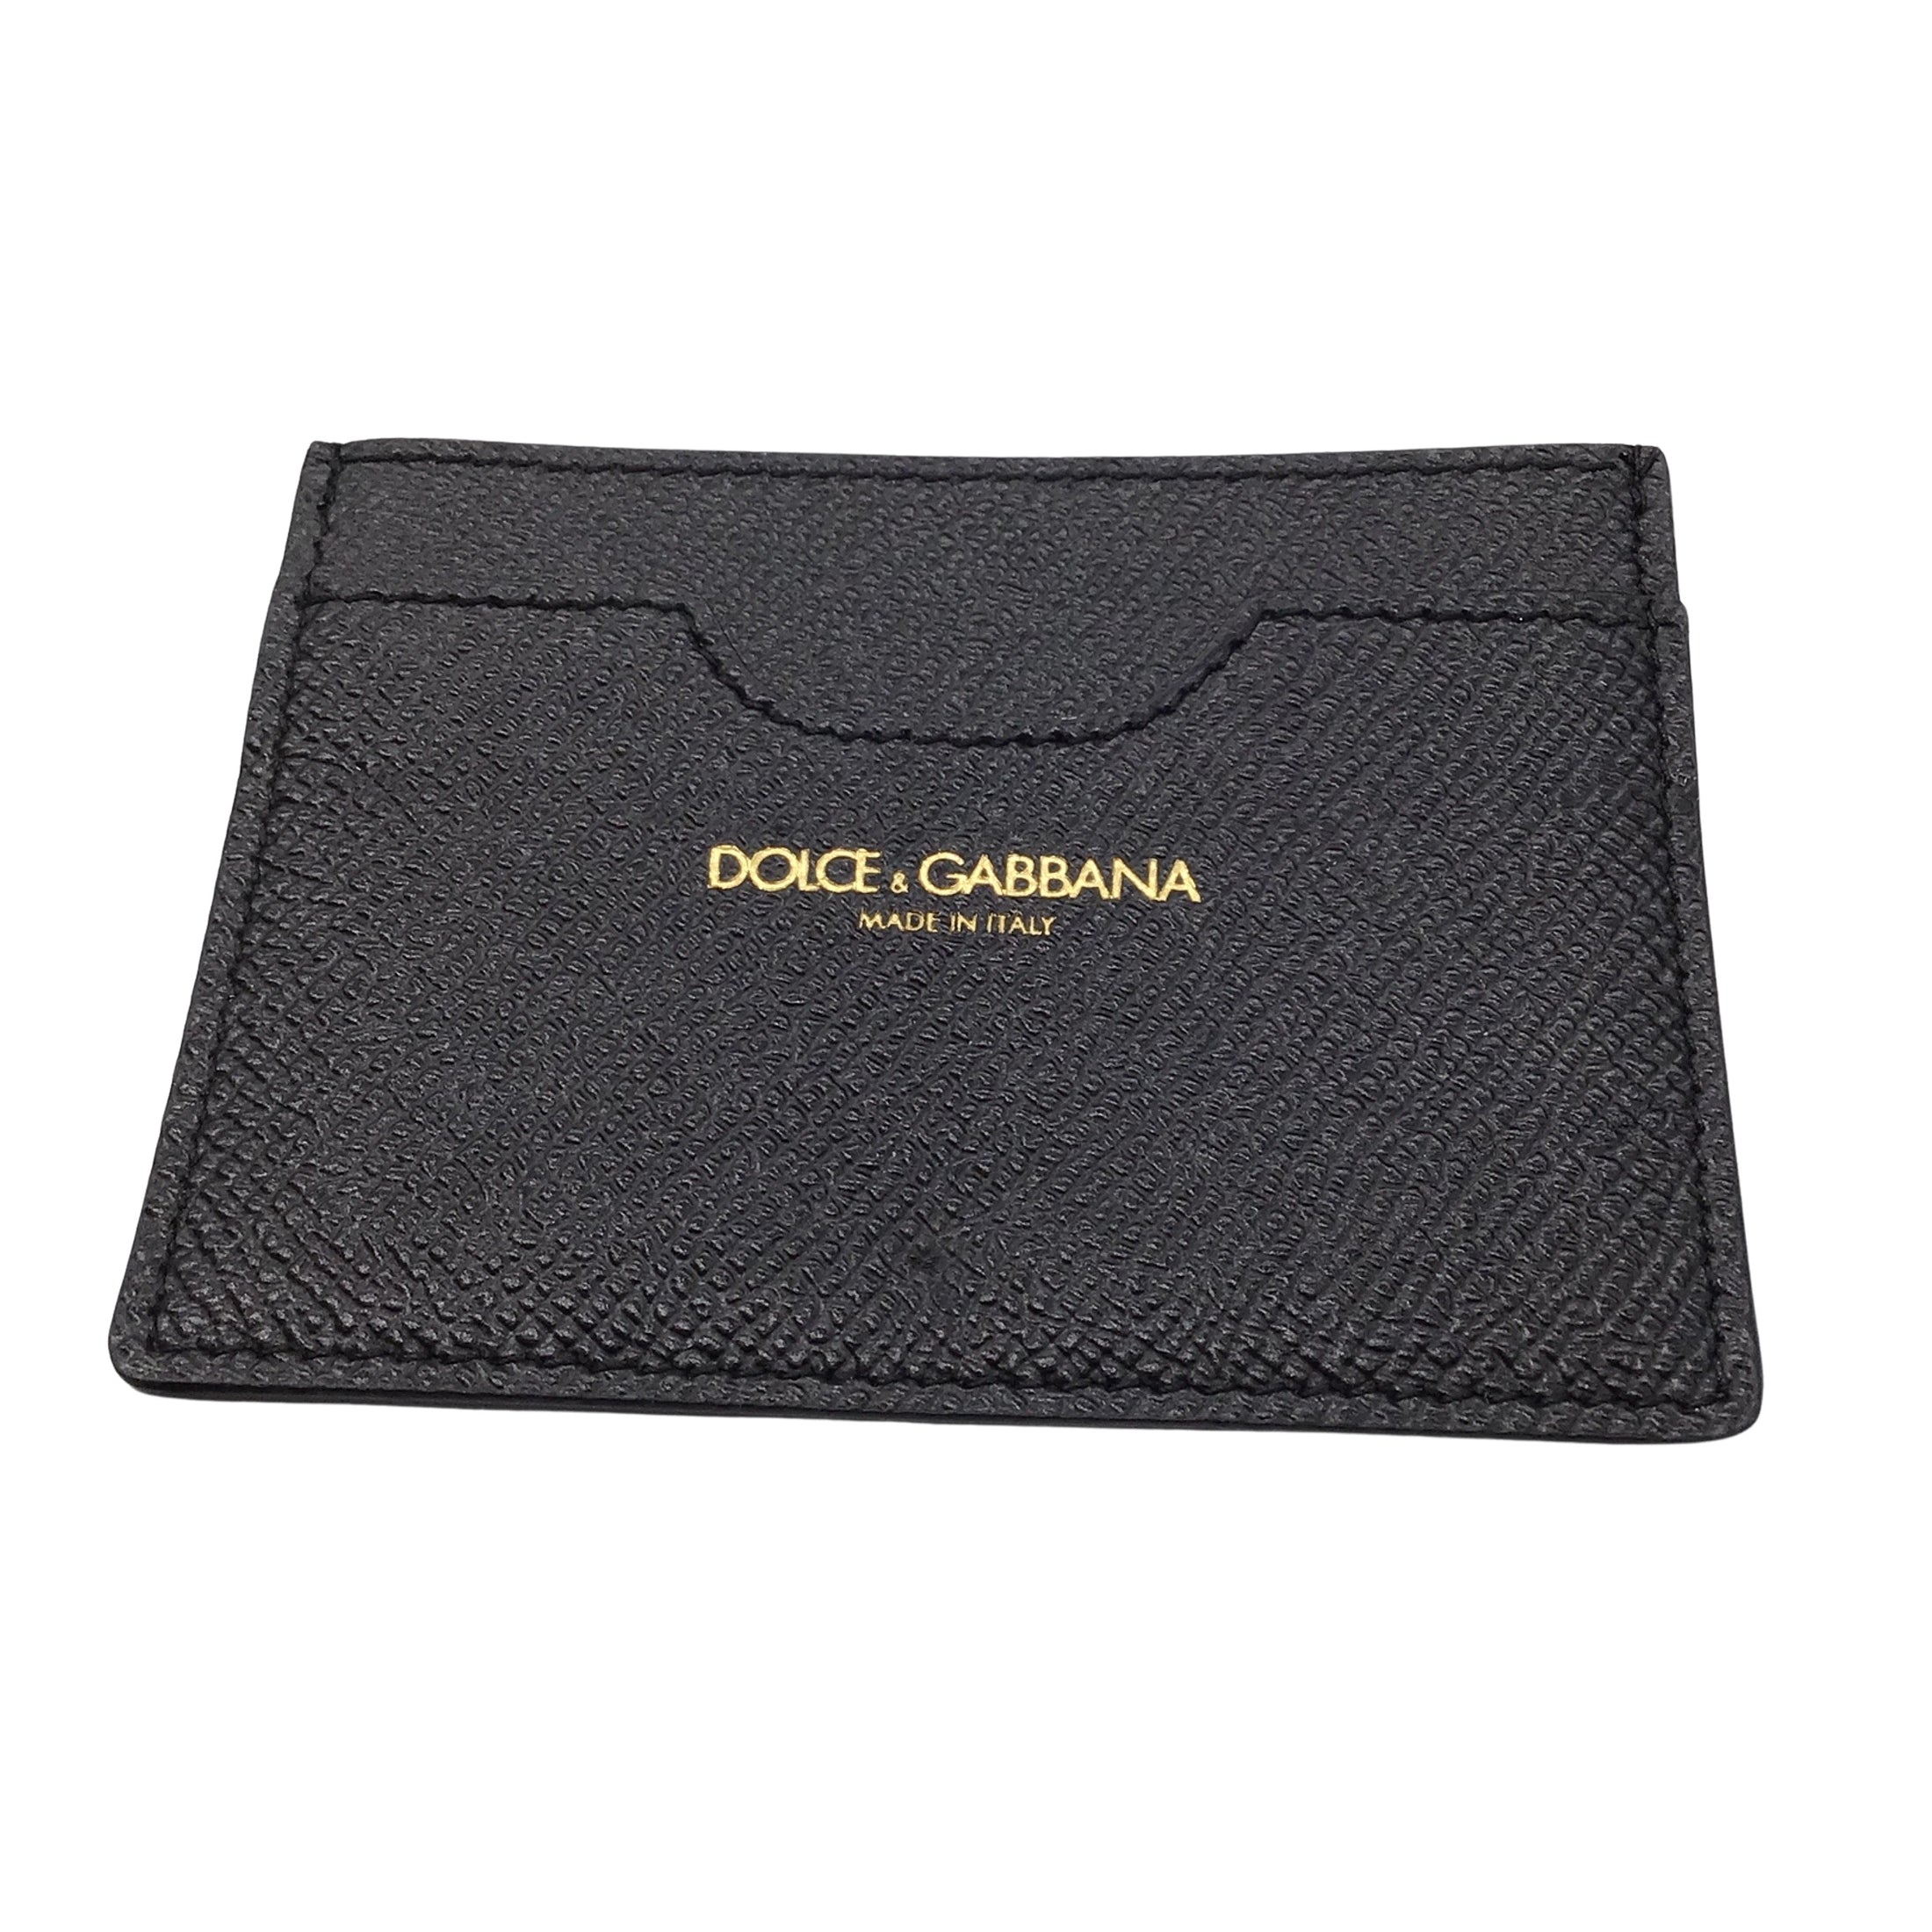 Dolce & Gabbana Dauphine Black Multi Embellished Floral Printed Calfskin Leather Clutch / Crossbody Bag